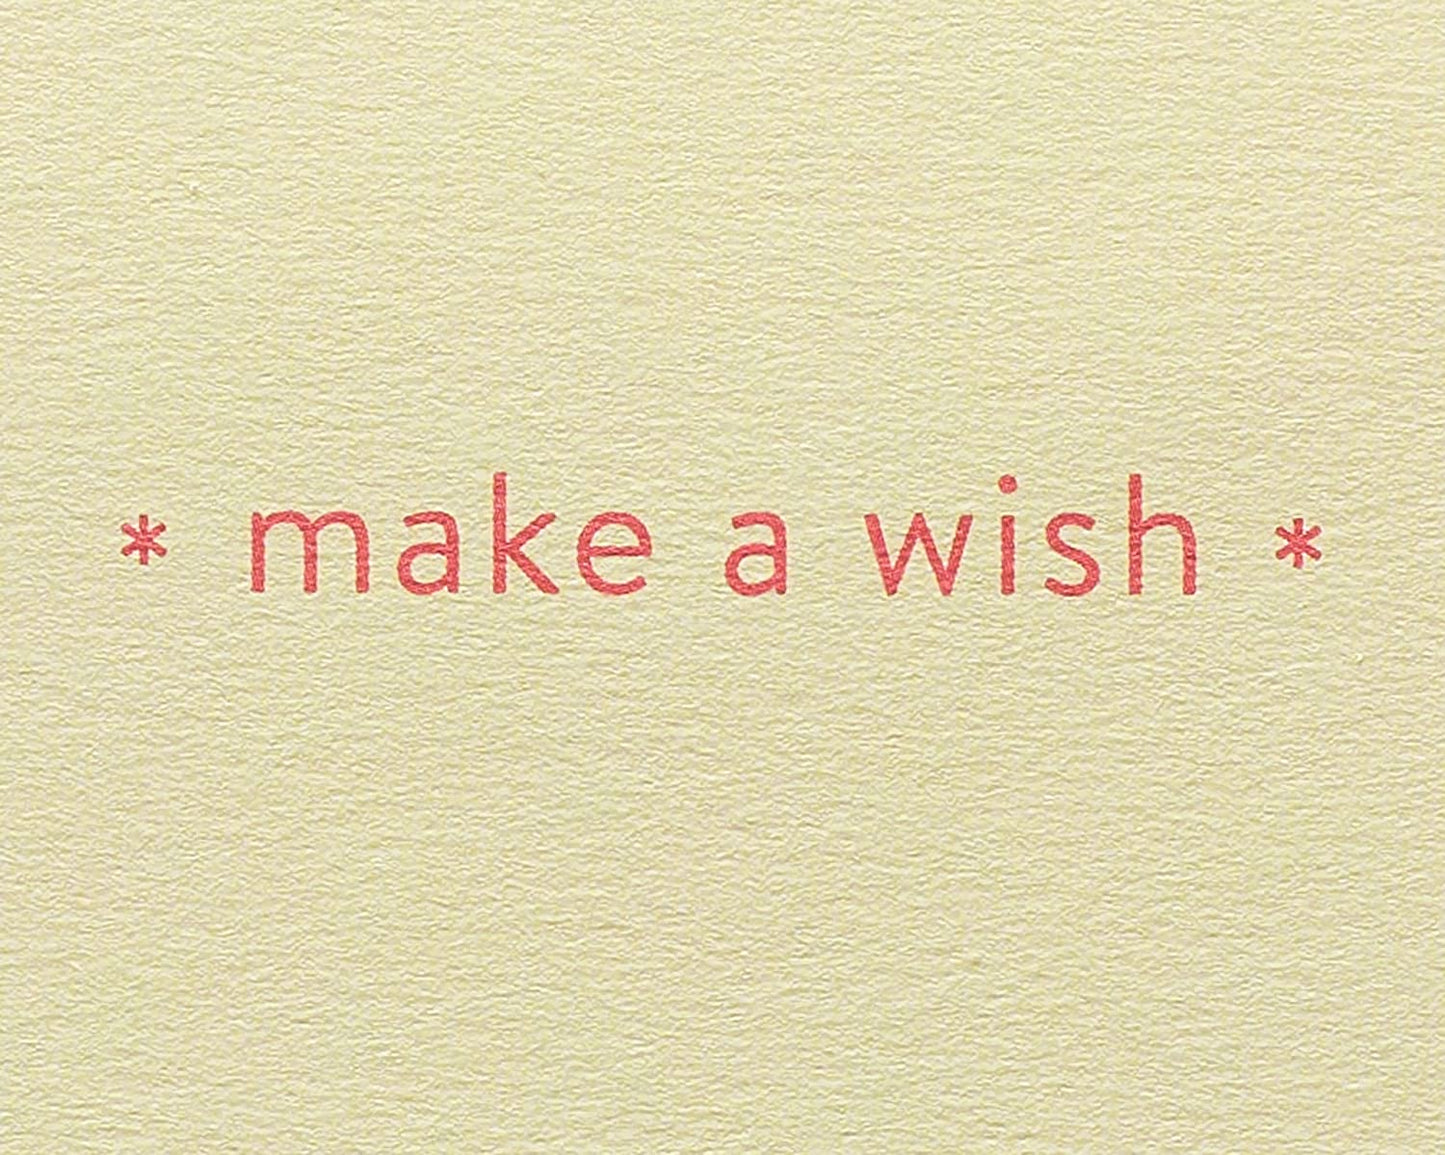 Papyrus Birthday Card (Make A Wish)